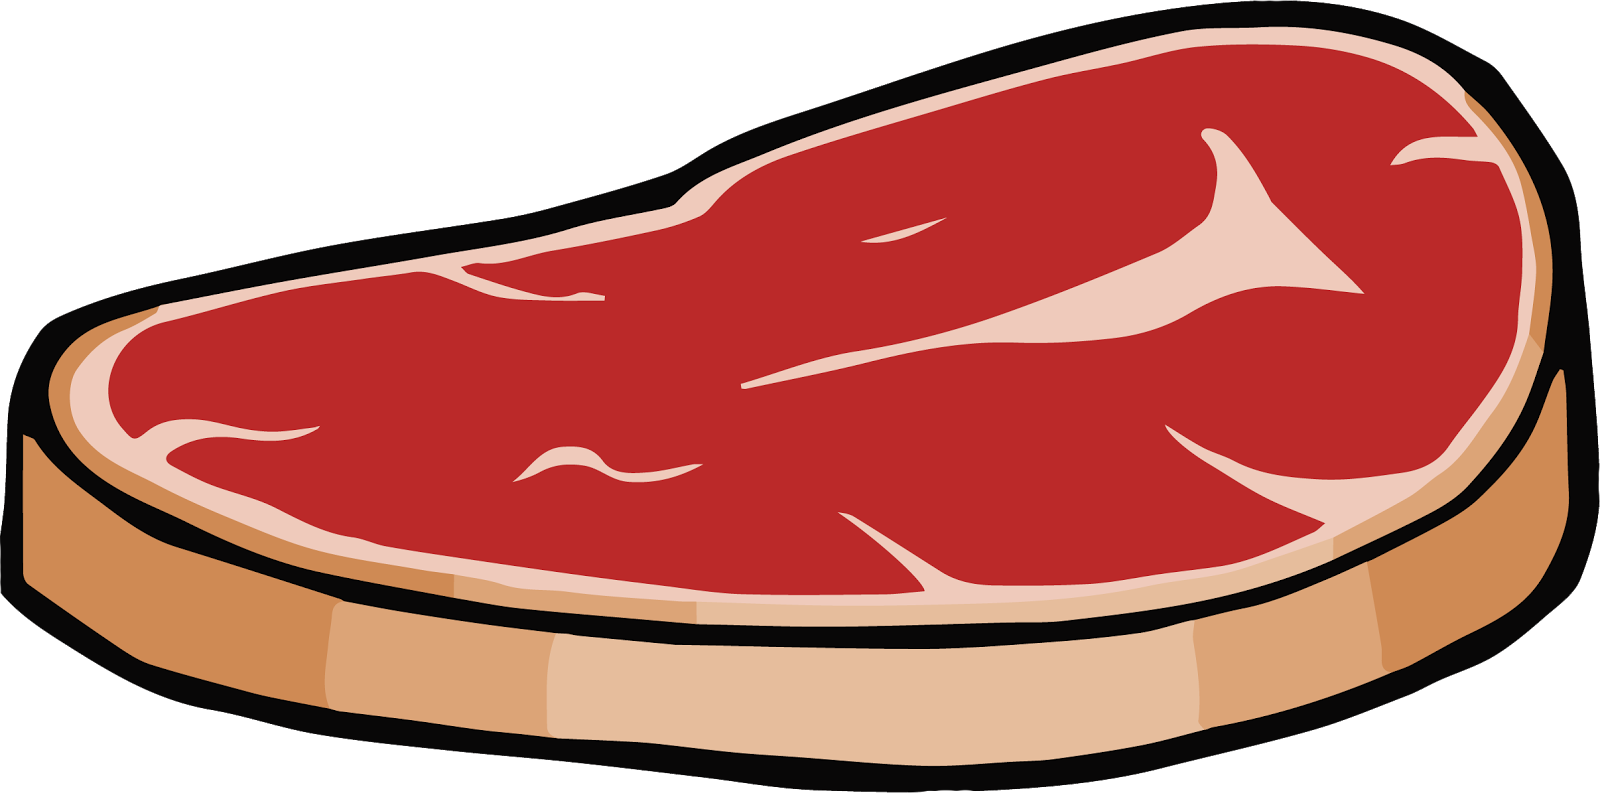 ... T-Bone Steak - An image o